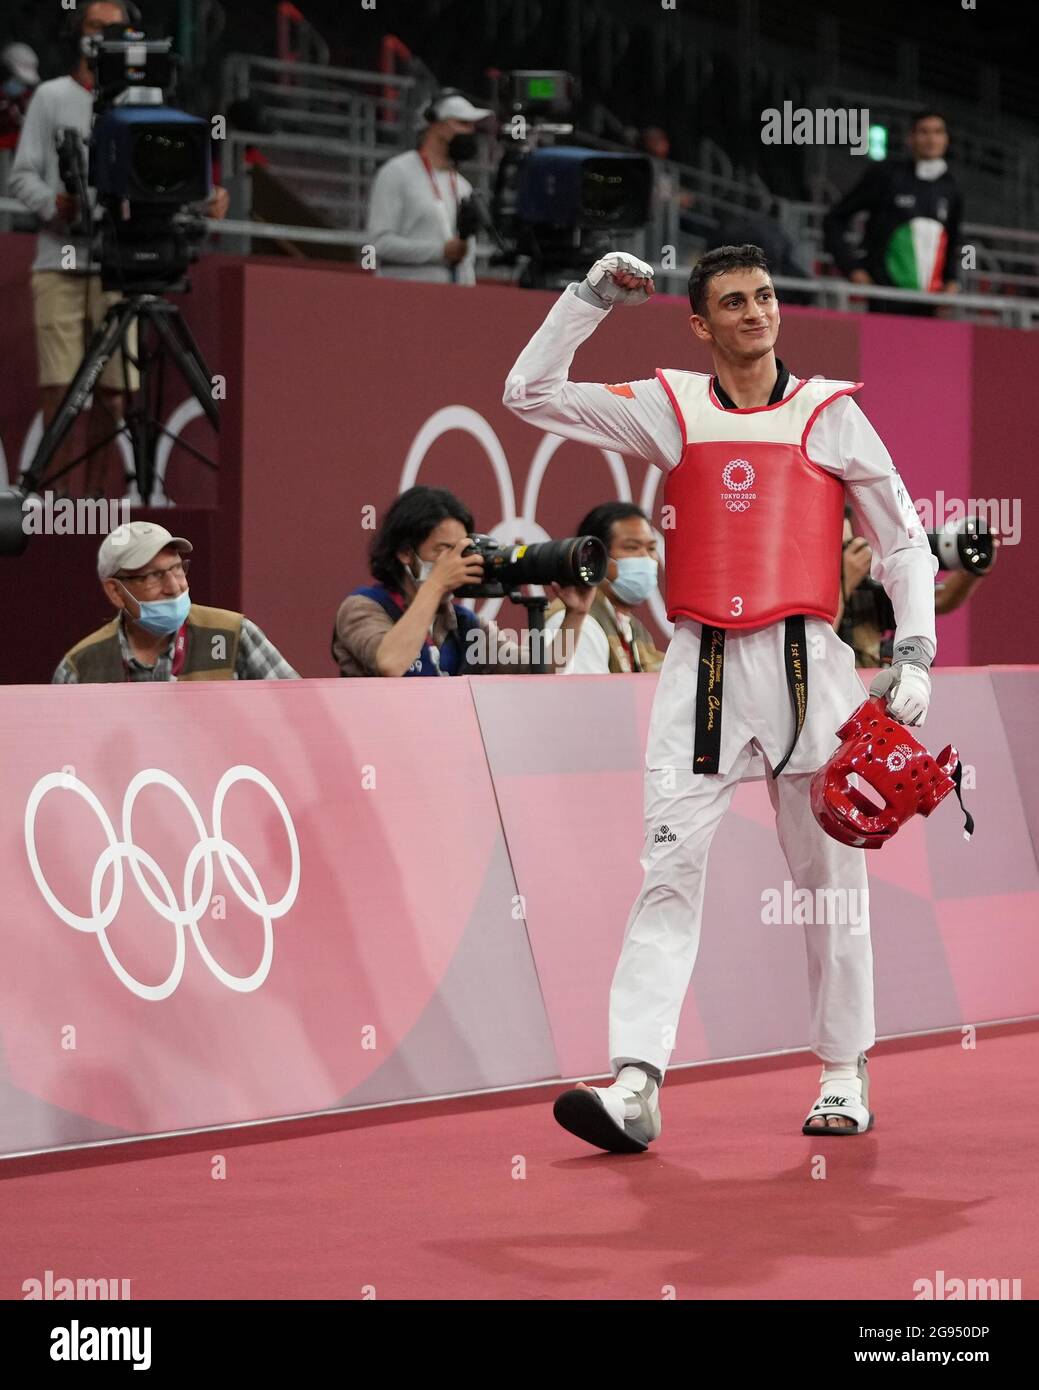 Tokyo, Japan. 24th July, 2021. Vito Dell'aquila of Italy celebrates after  the men's 58kg taekwondo final match at the Tokyo 2020 Olympic Games in  Tokyo, Japan, July 24, 2021. Credit: Wang Yuguo/Xinhua/Alamy